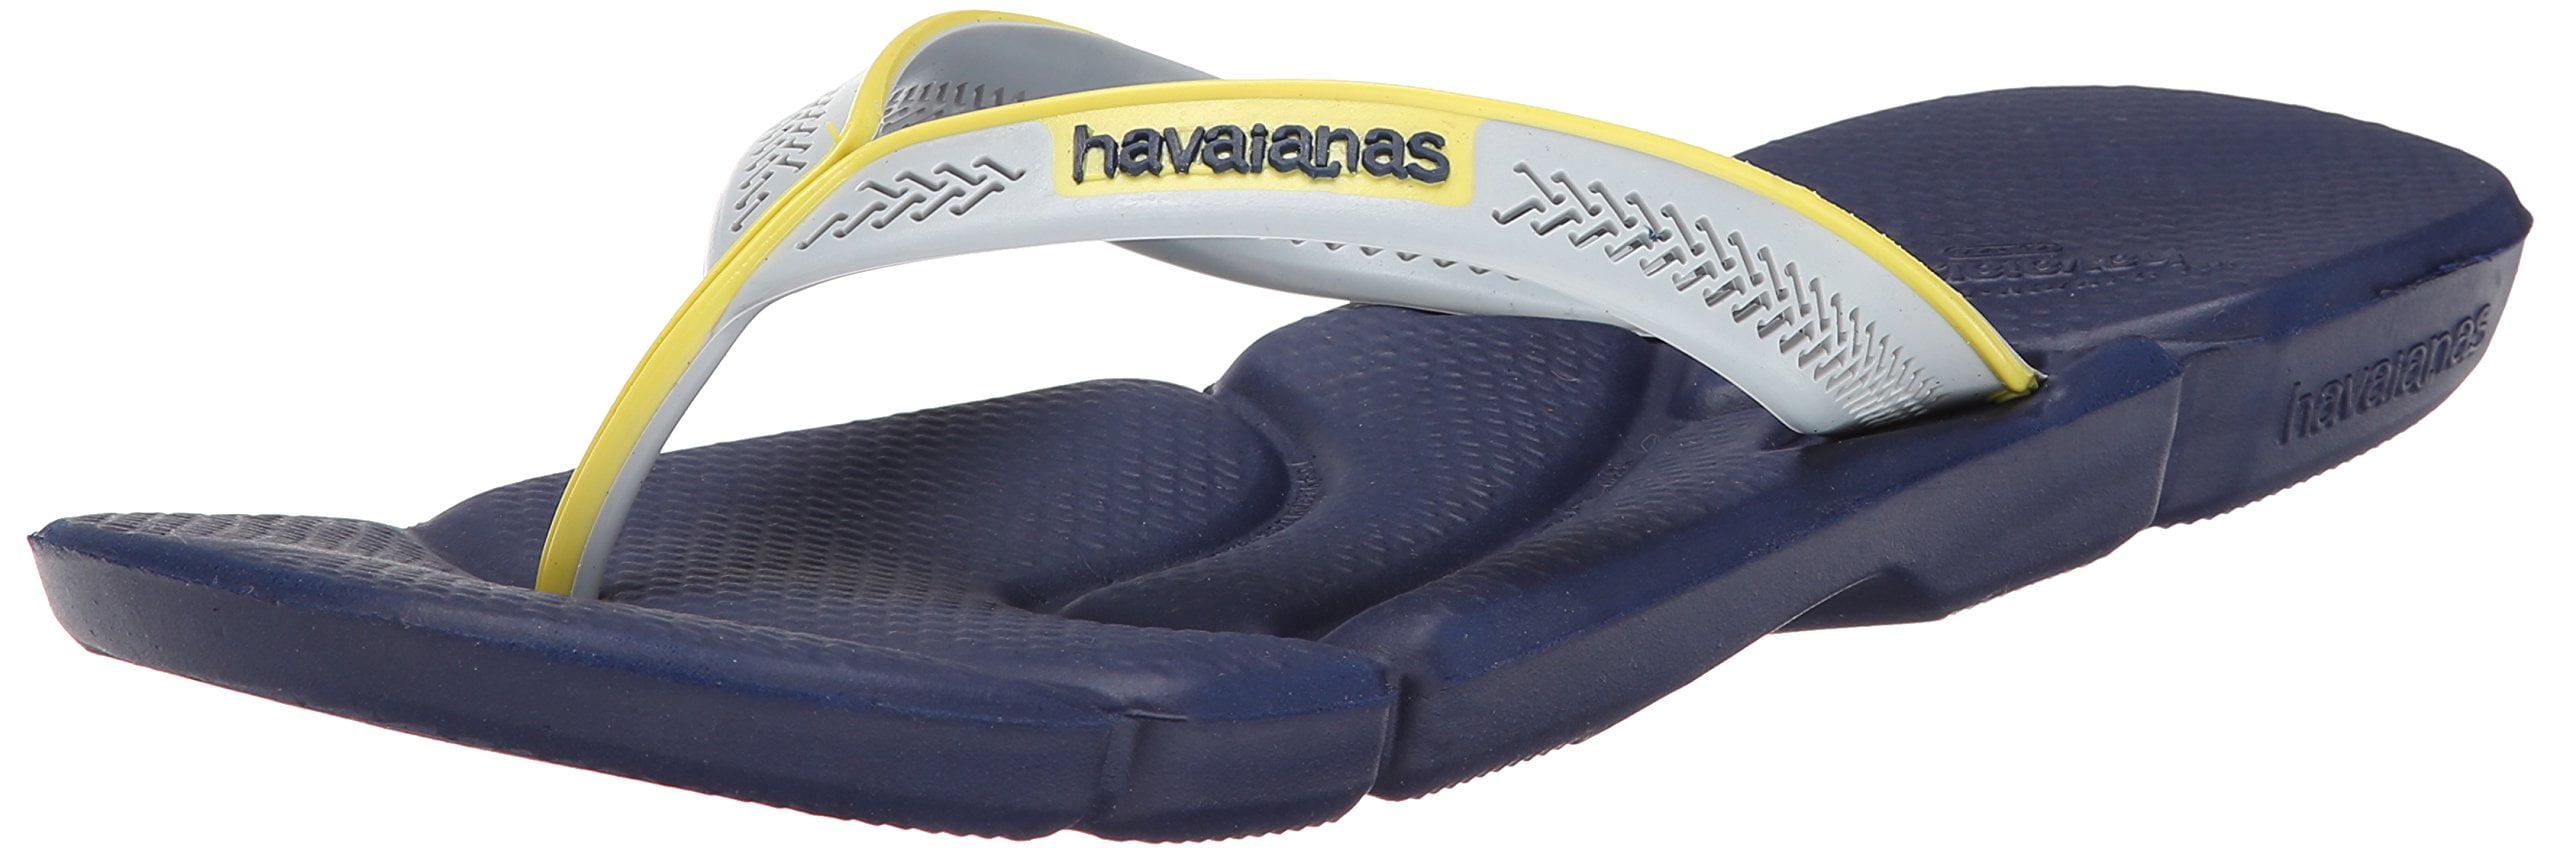 havaianas power sandal